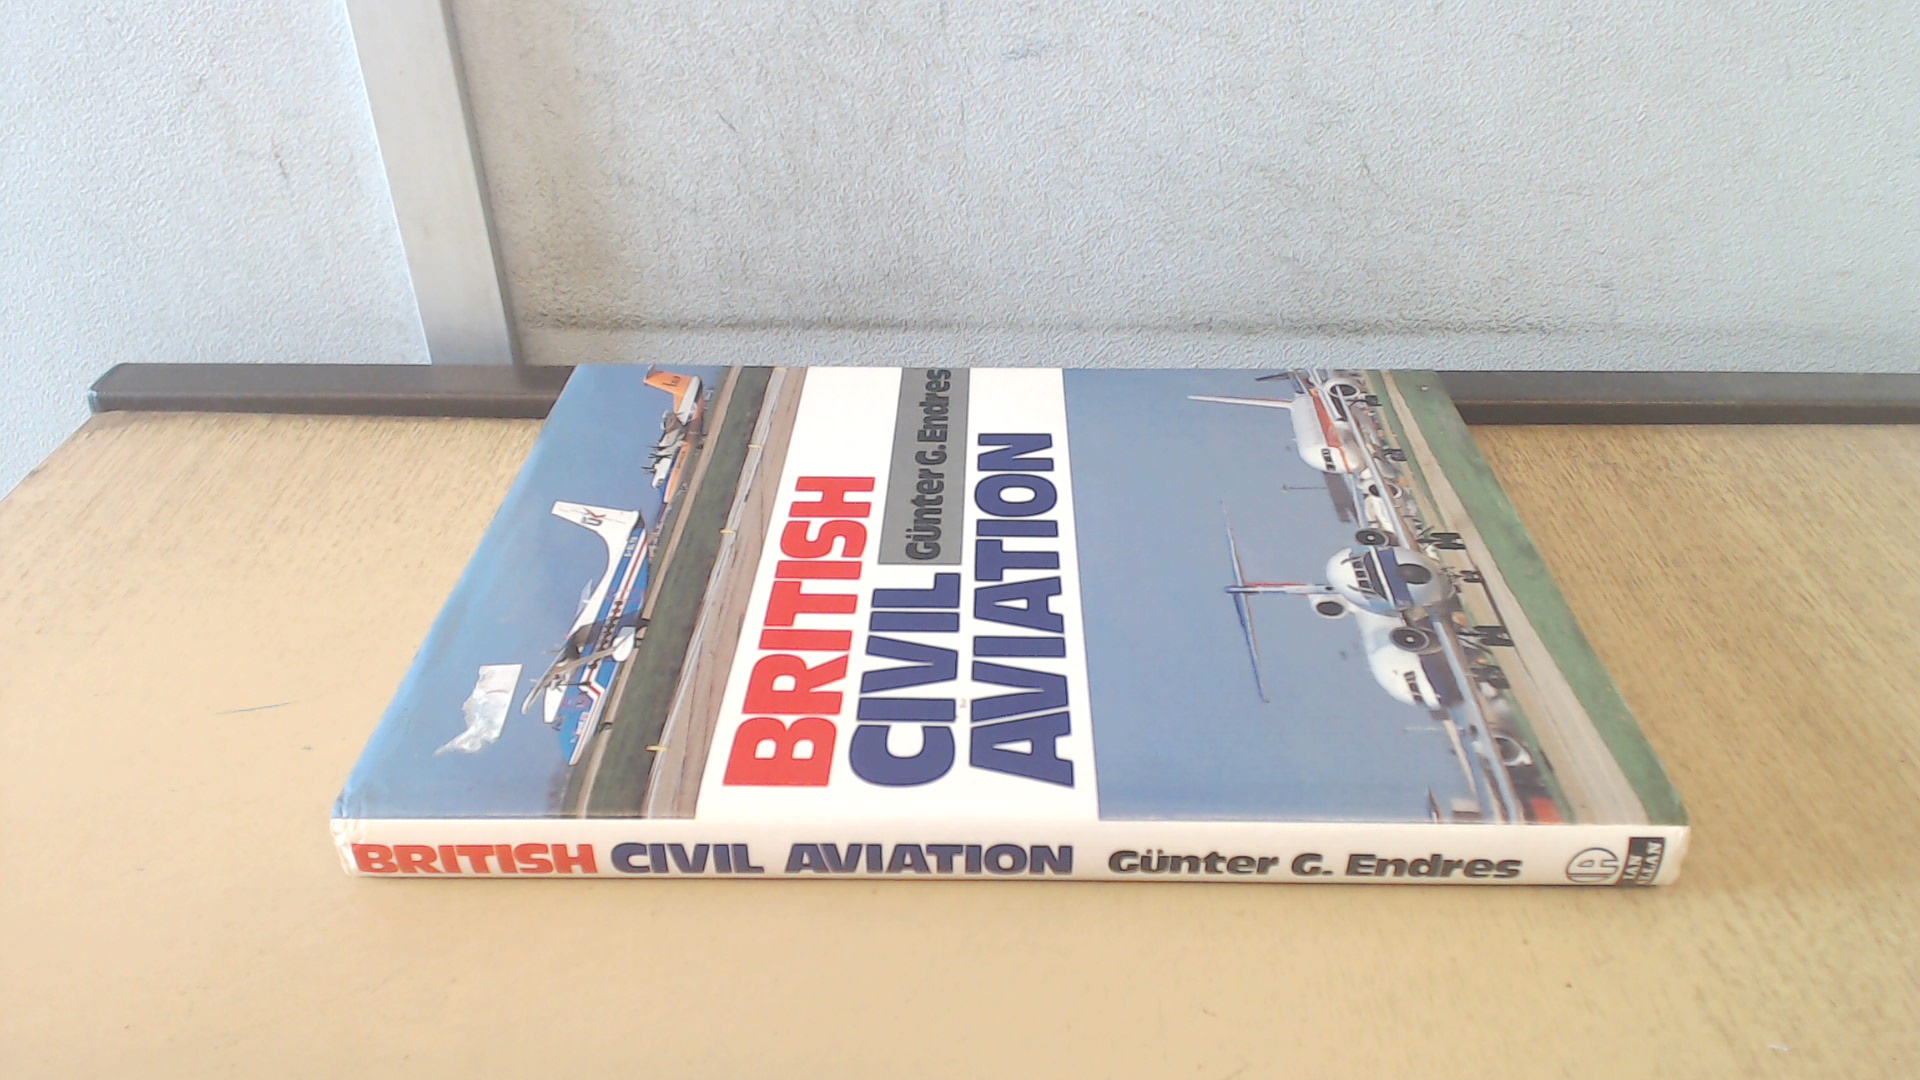 British Civil Aviation - Endres, Gunter G.